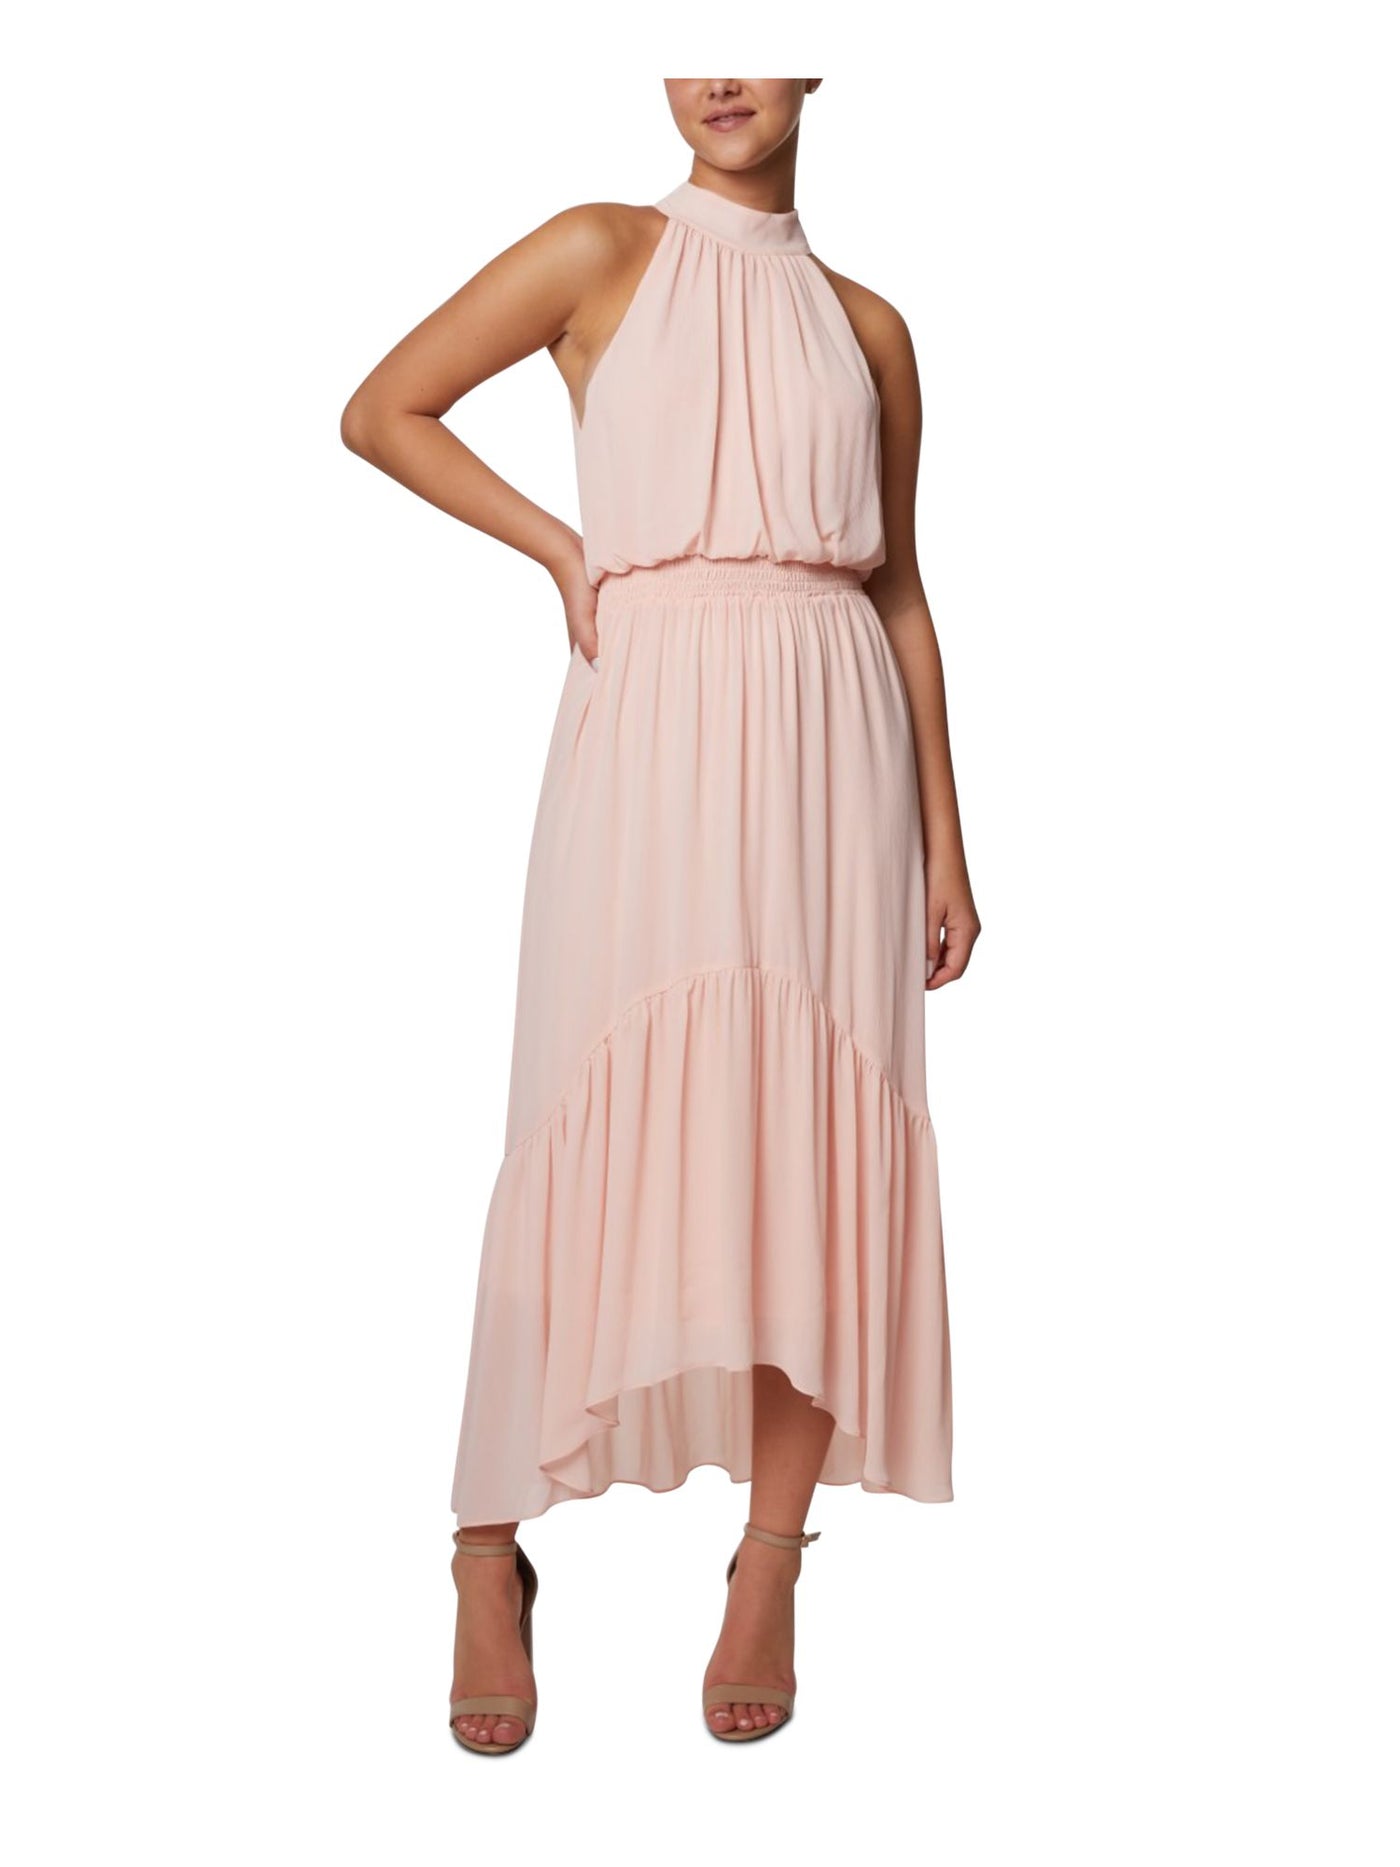 LAUNDRY Womens Pink Smocked Sheer Tie Lined Ruffled Sleeveless Halter Midi A-Line Dress 8